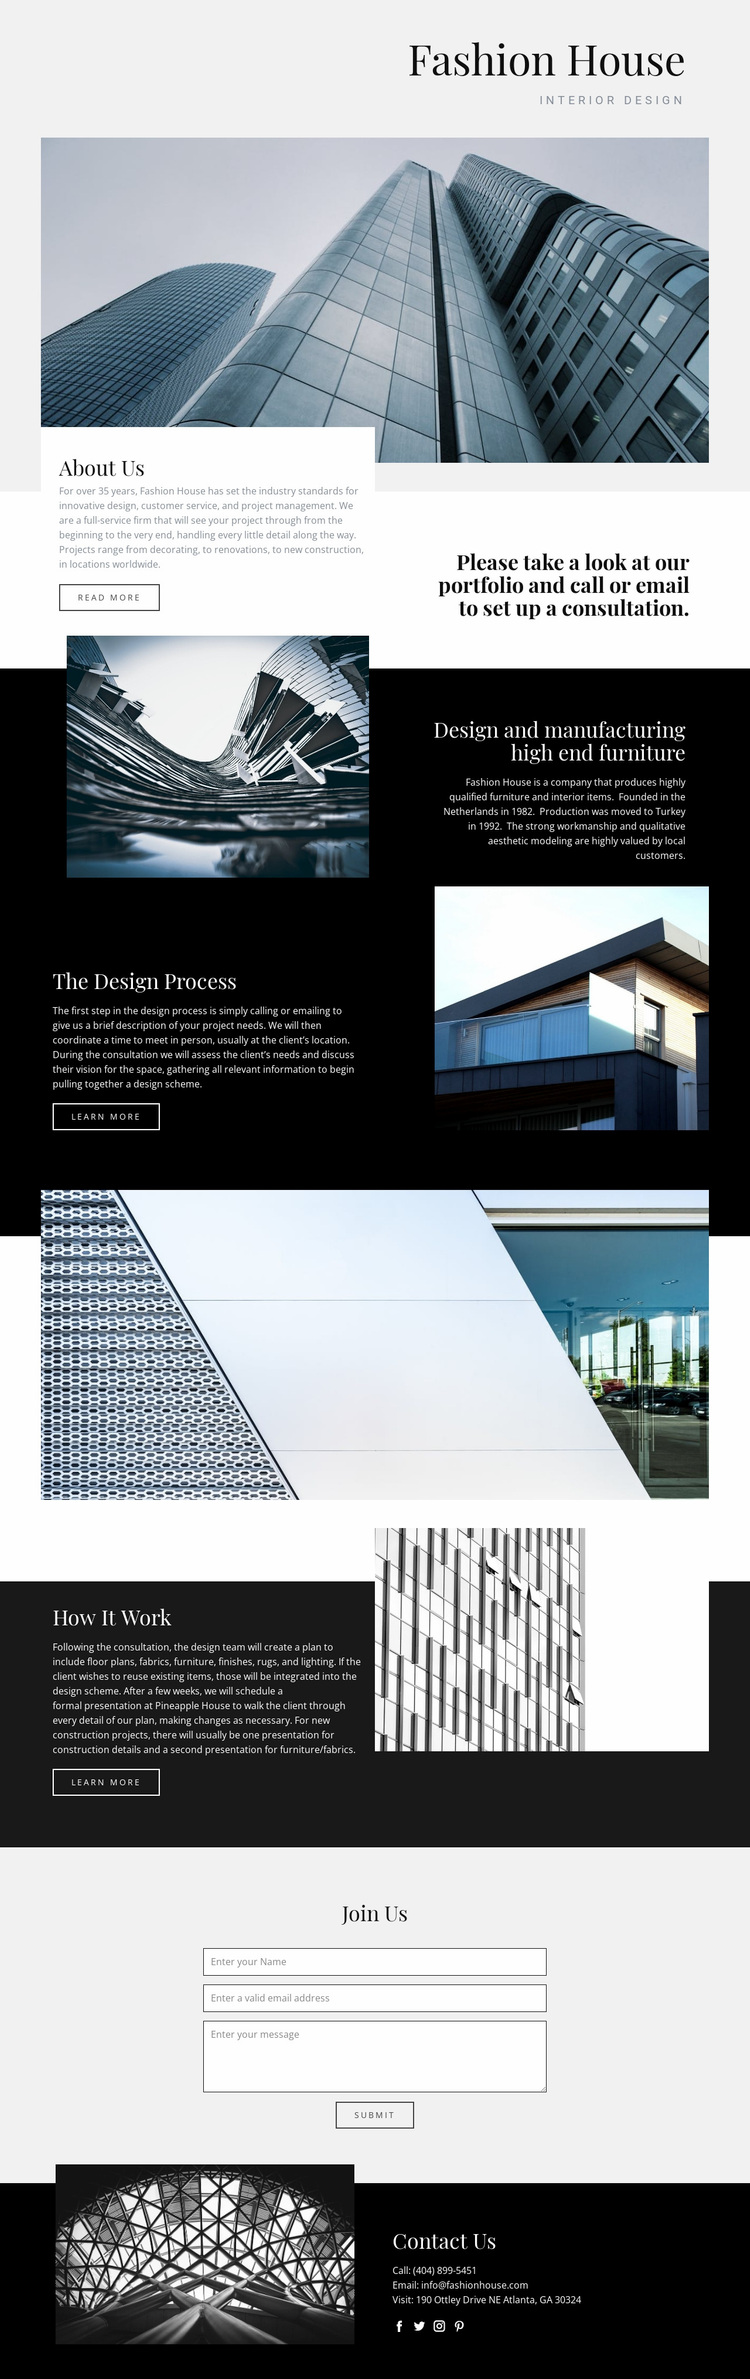 Fashion House Website Design